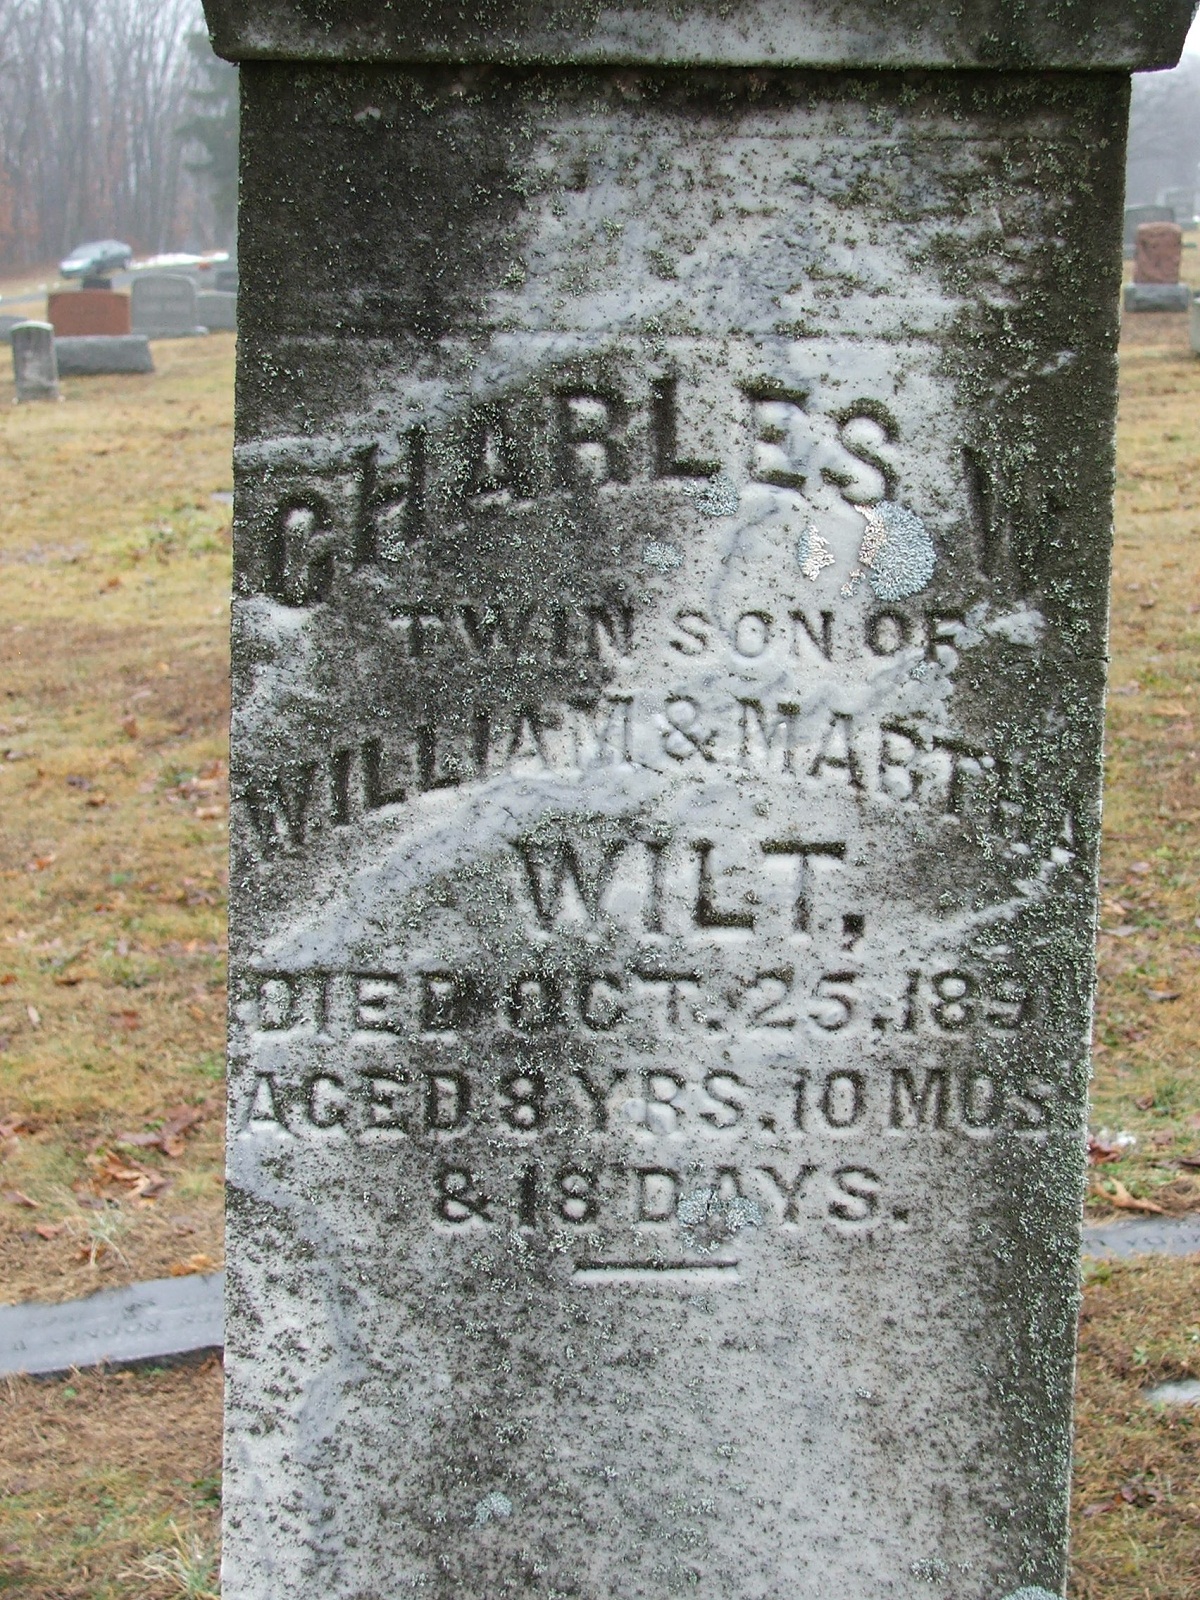 Charles W. Wilt 1882-1891
